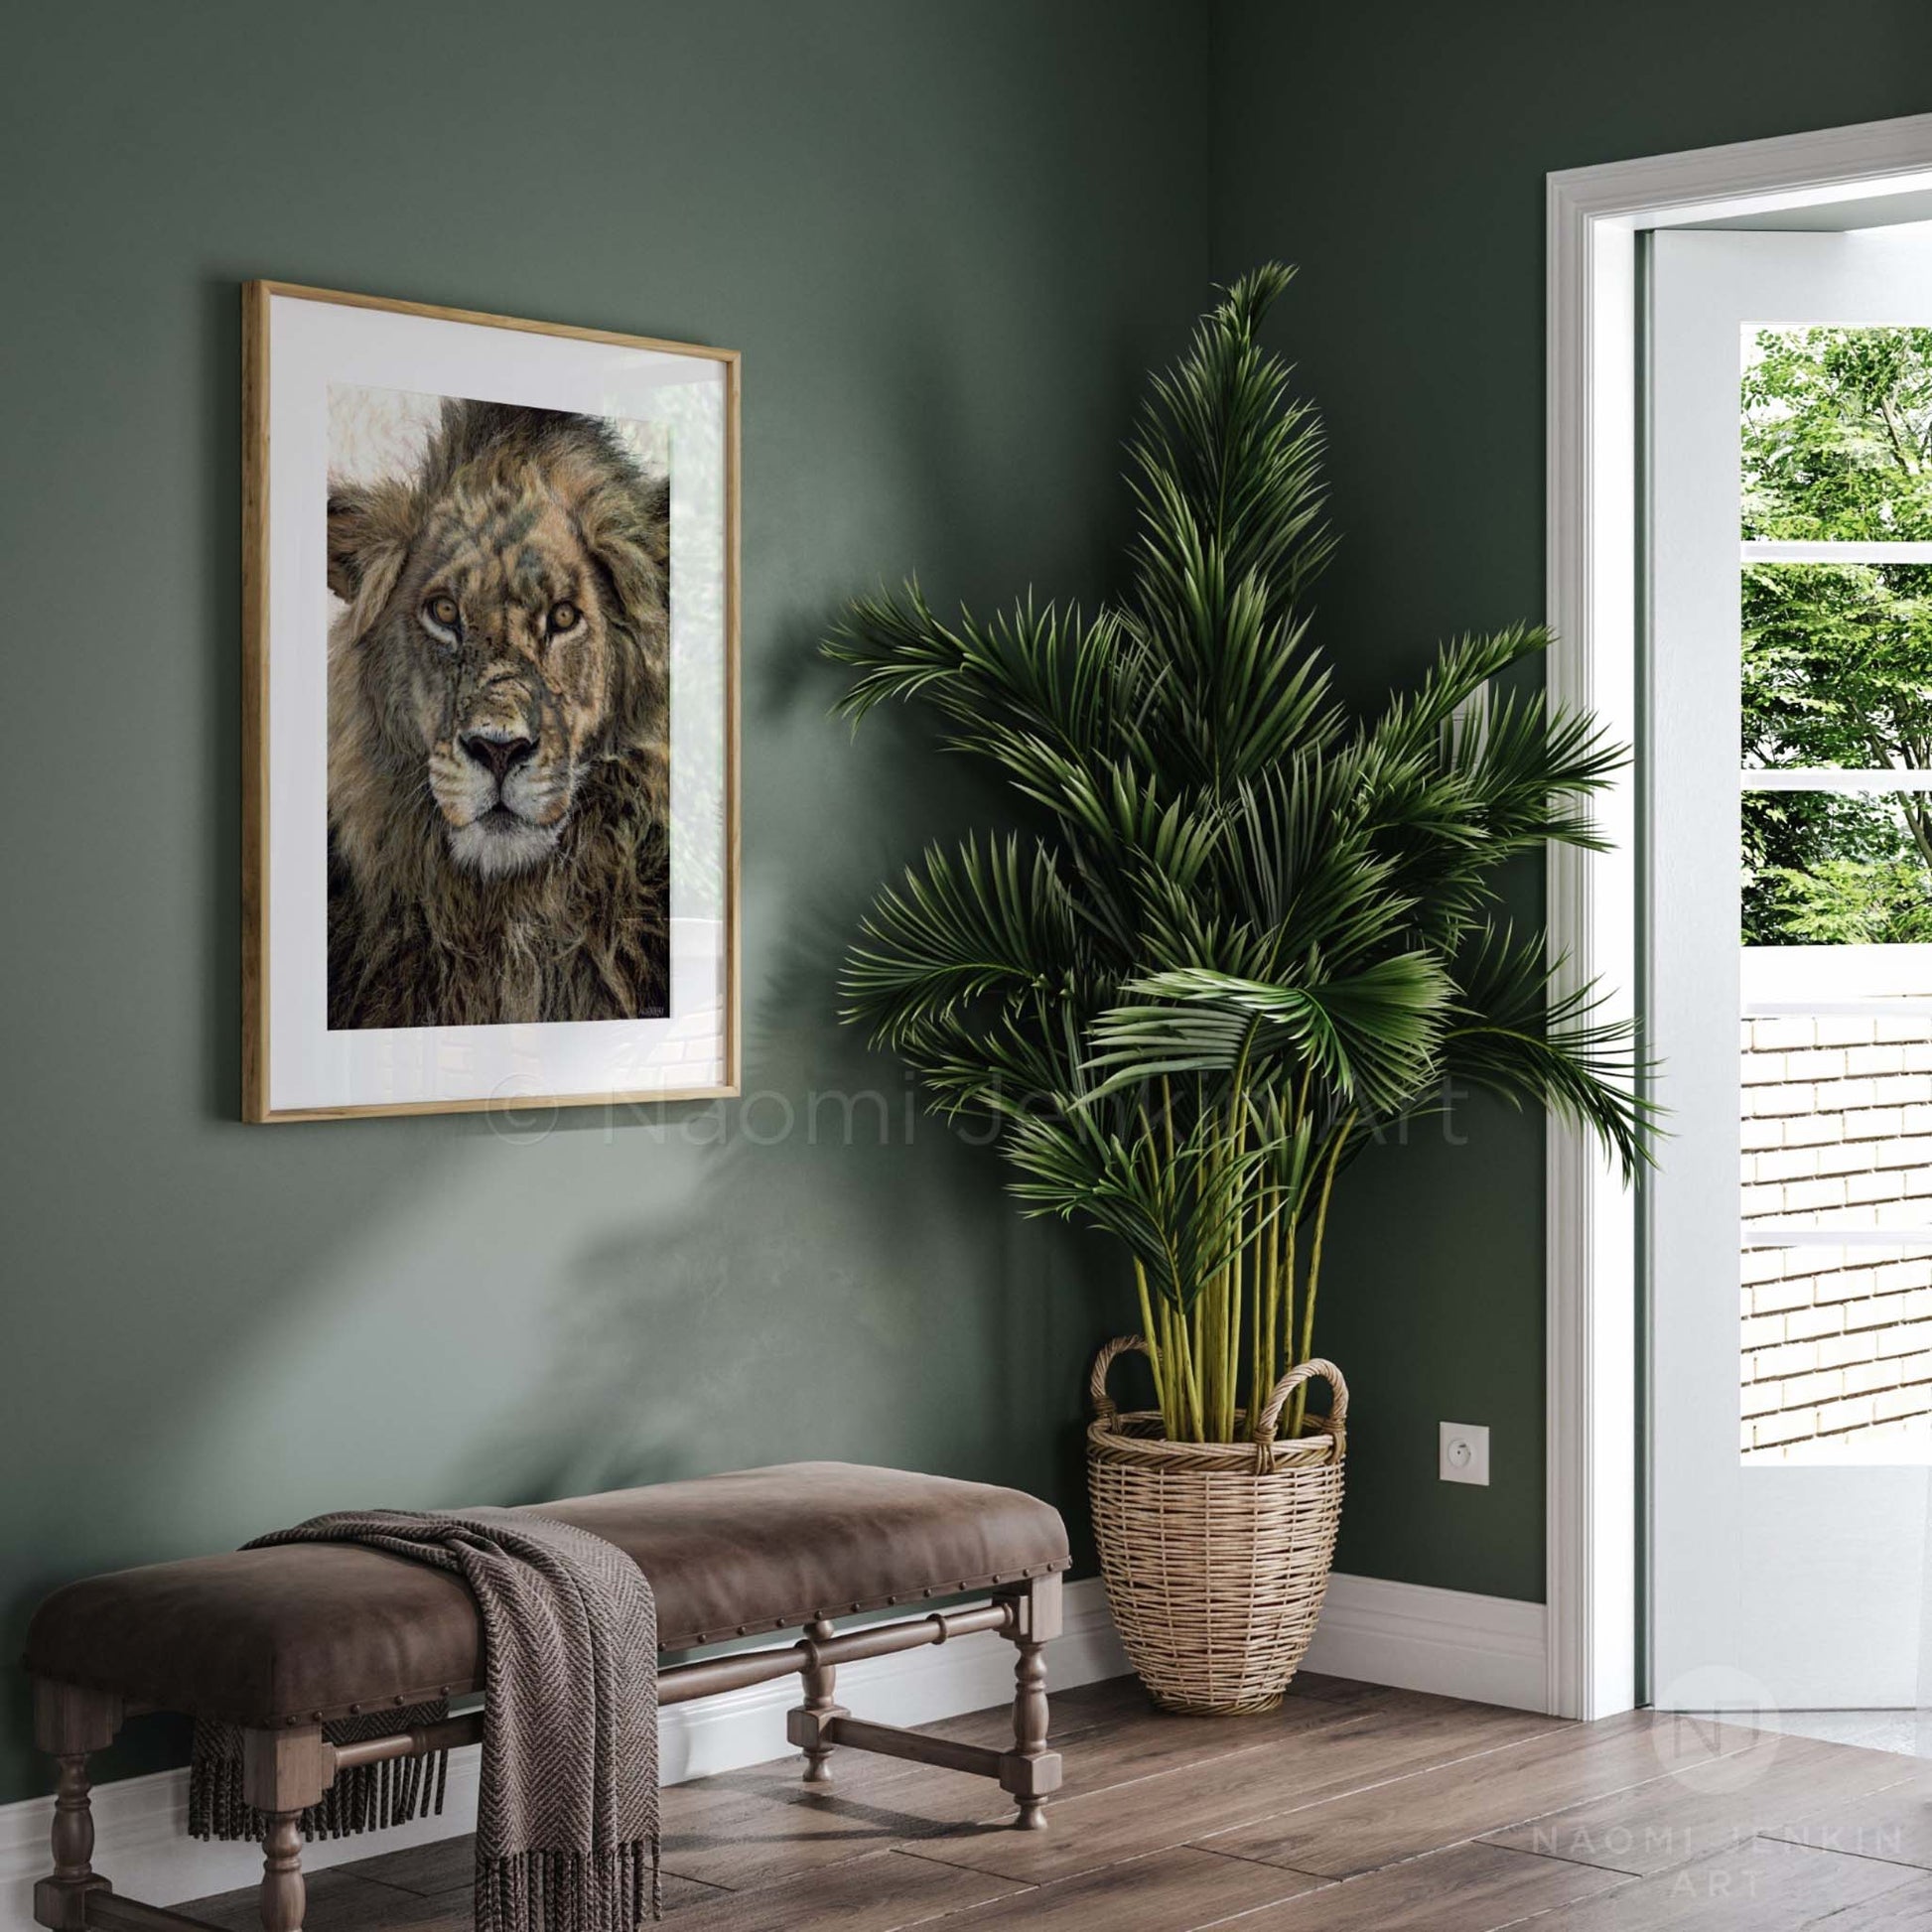 Original lion painting named "Warrior" by wildlife artist Naomi Jenkin Art, displayed in a hallway.